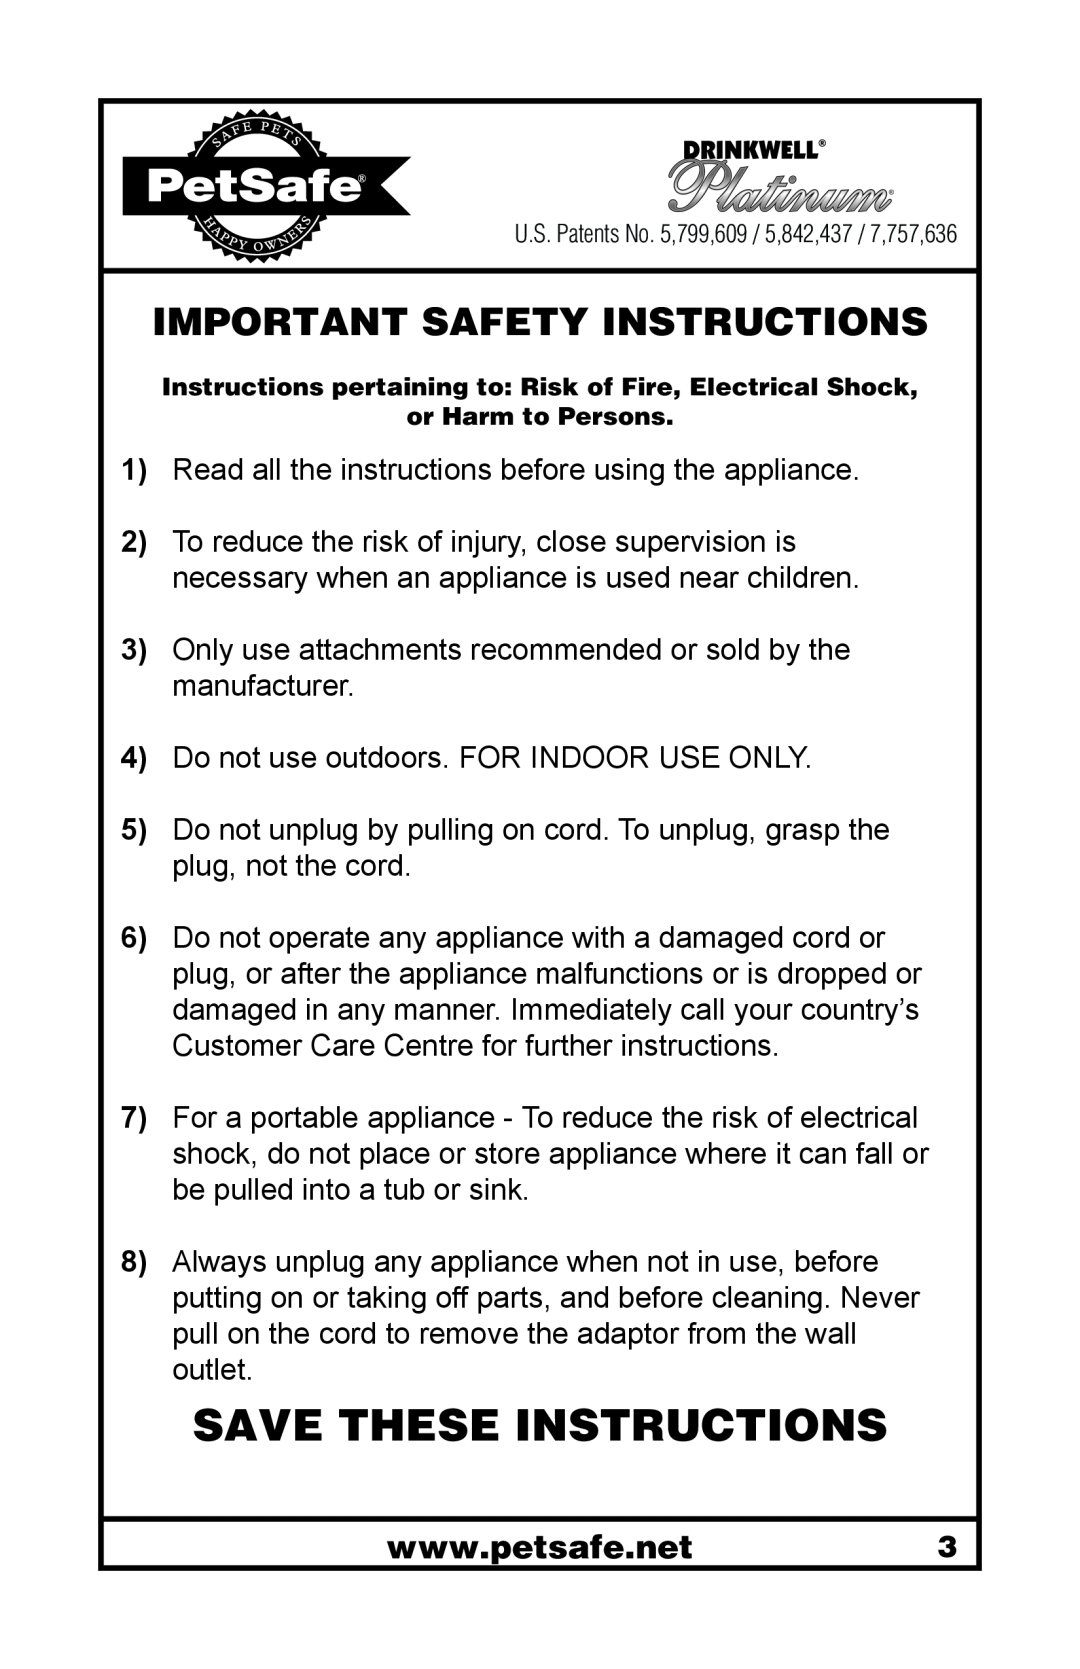 Petsafe 400-1255-19 manuel dutilisation Important Safety Instructions, Save These Instructions 